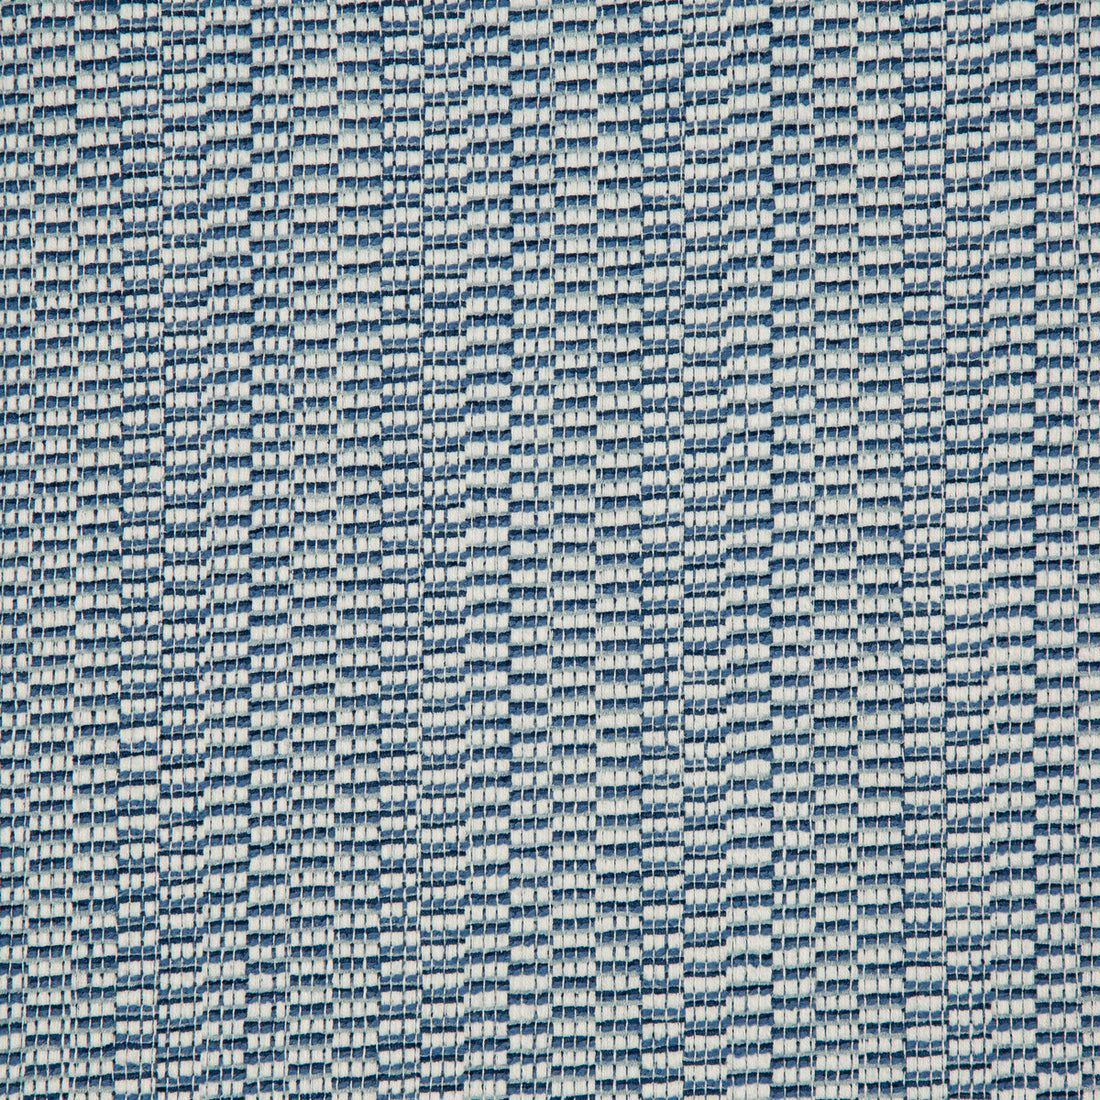 Kravet Smart fabric in 35934-15 color - pattern 35934.15.0 - by Kravet Smart in the Performance Kravetarmor collection